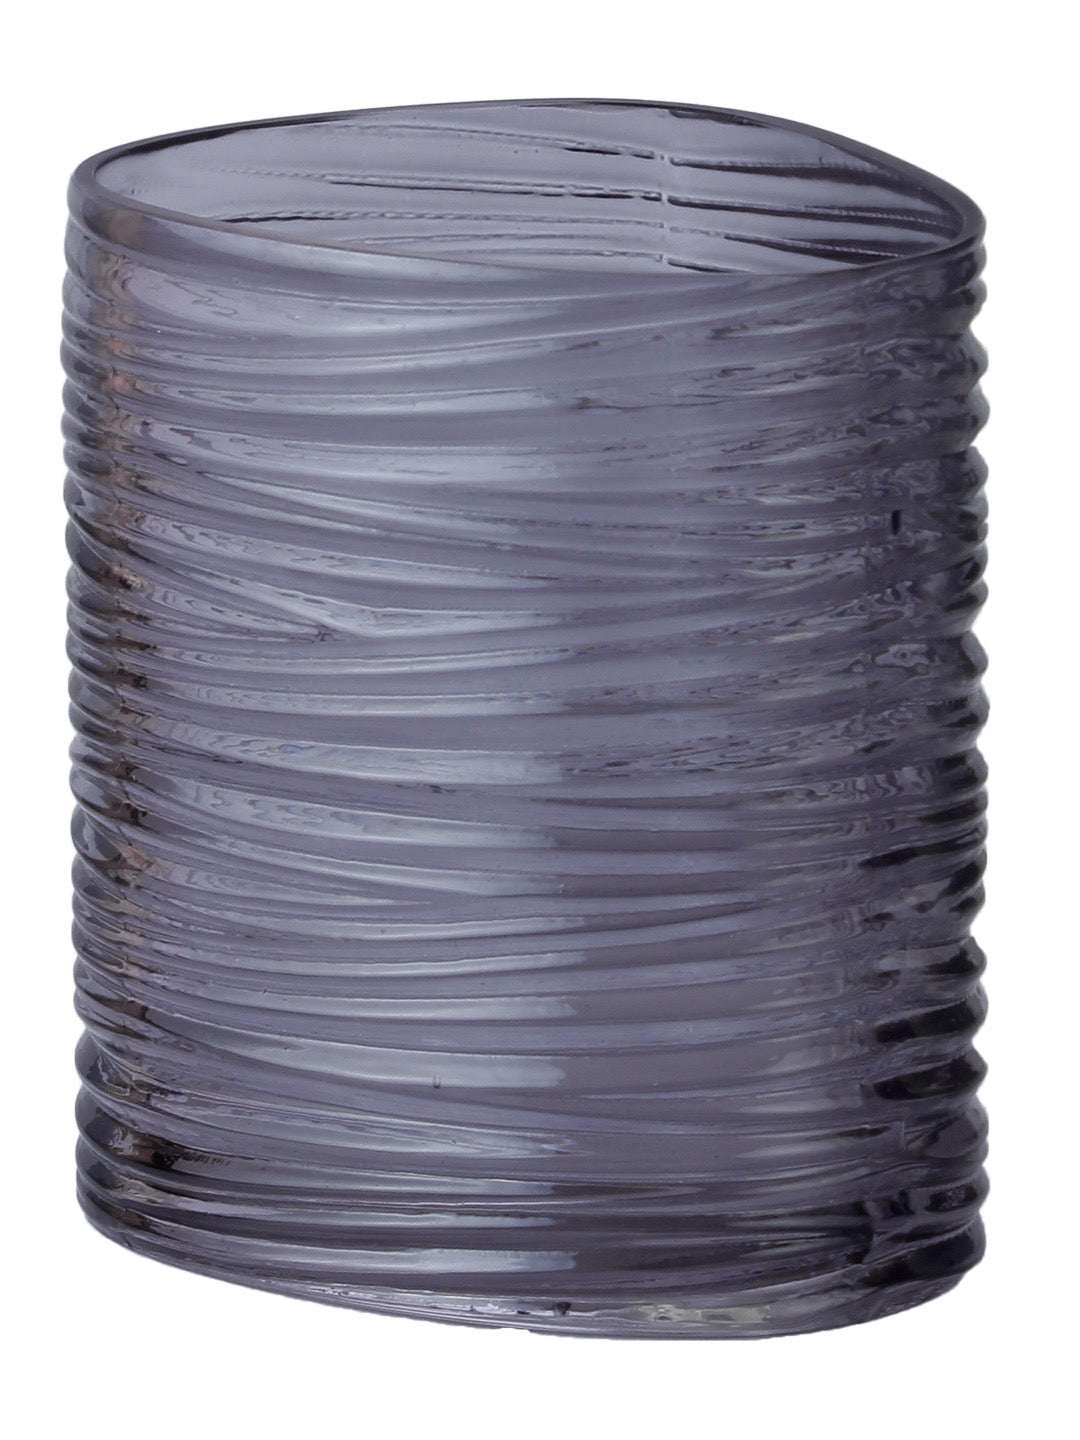 Abstract Design Glass Flower Vase in Grey Colour - Default Title (VAS2039GR)